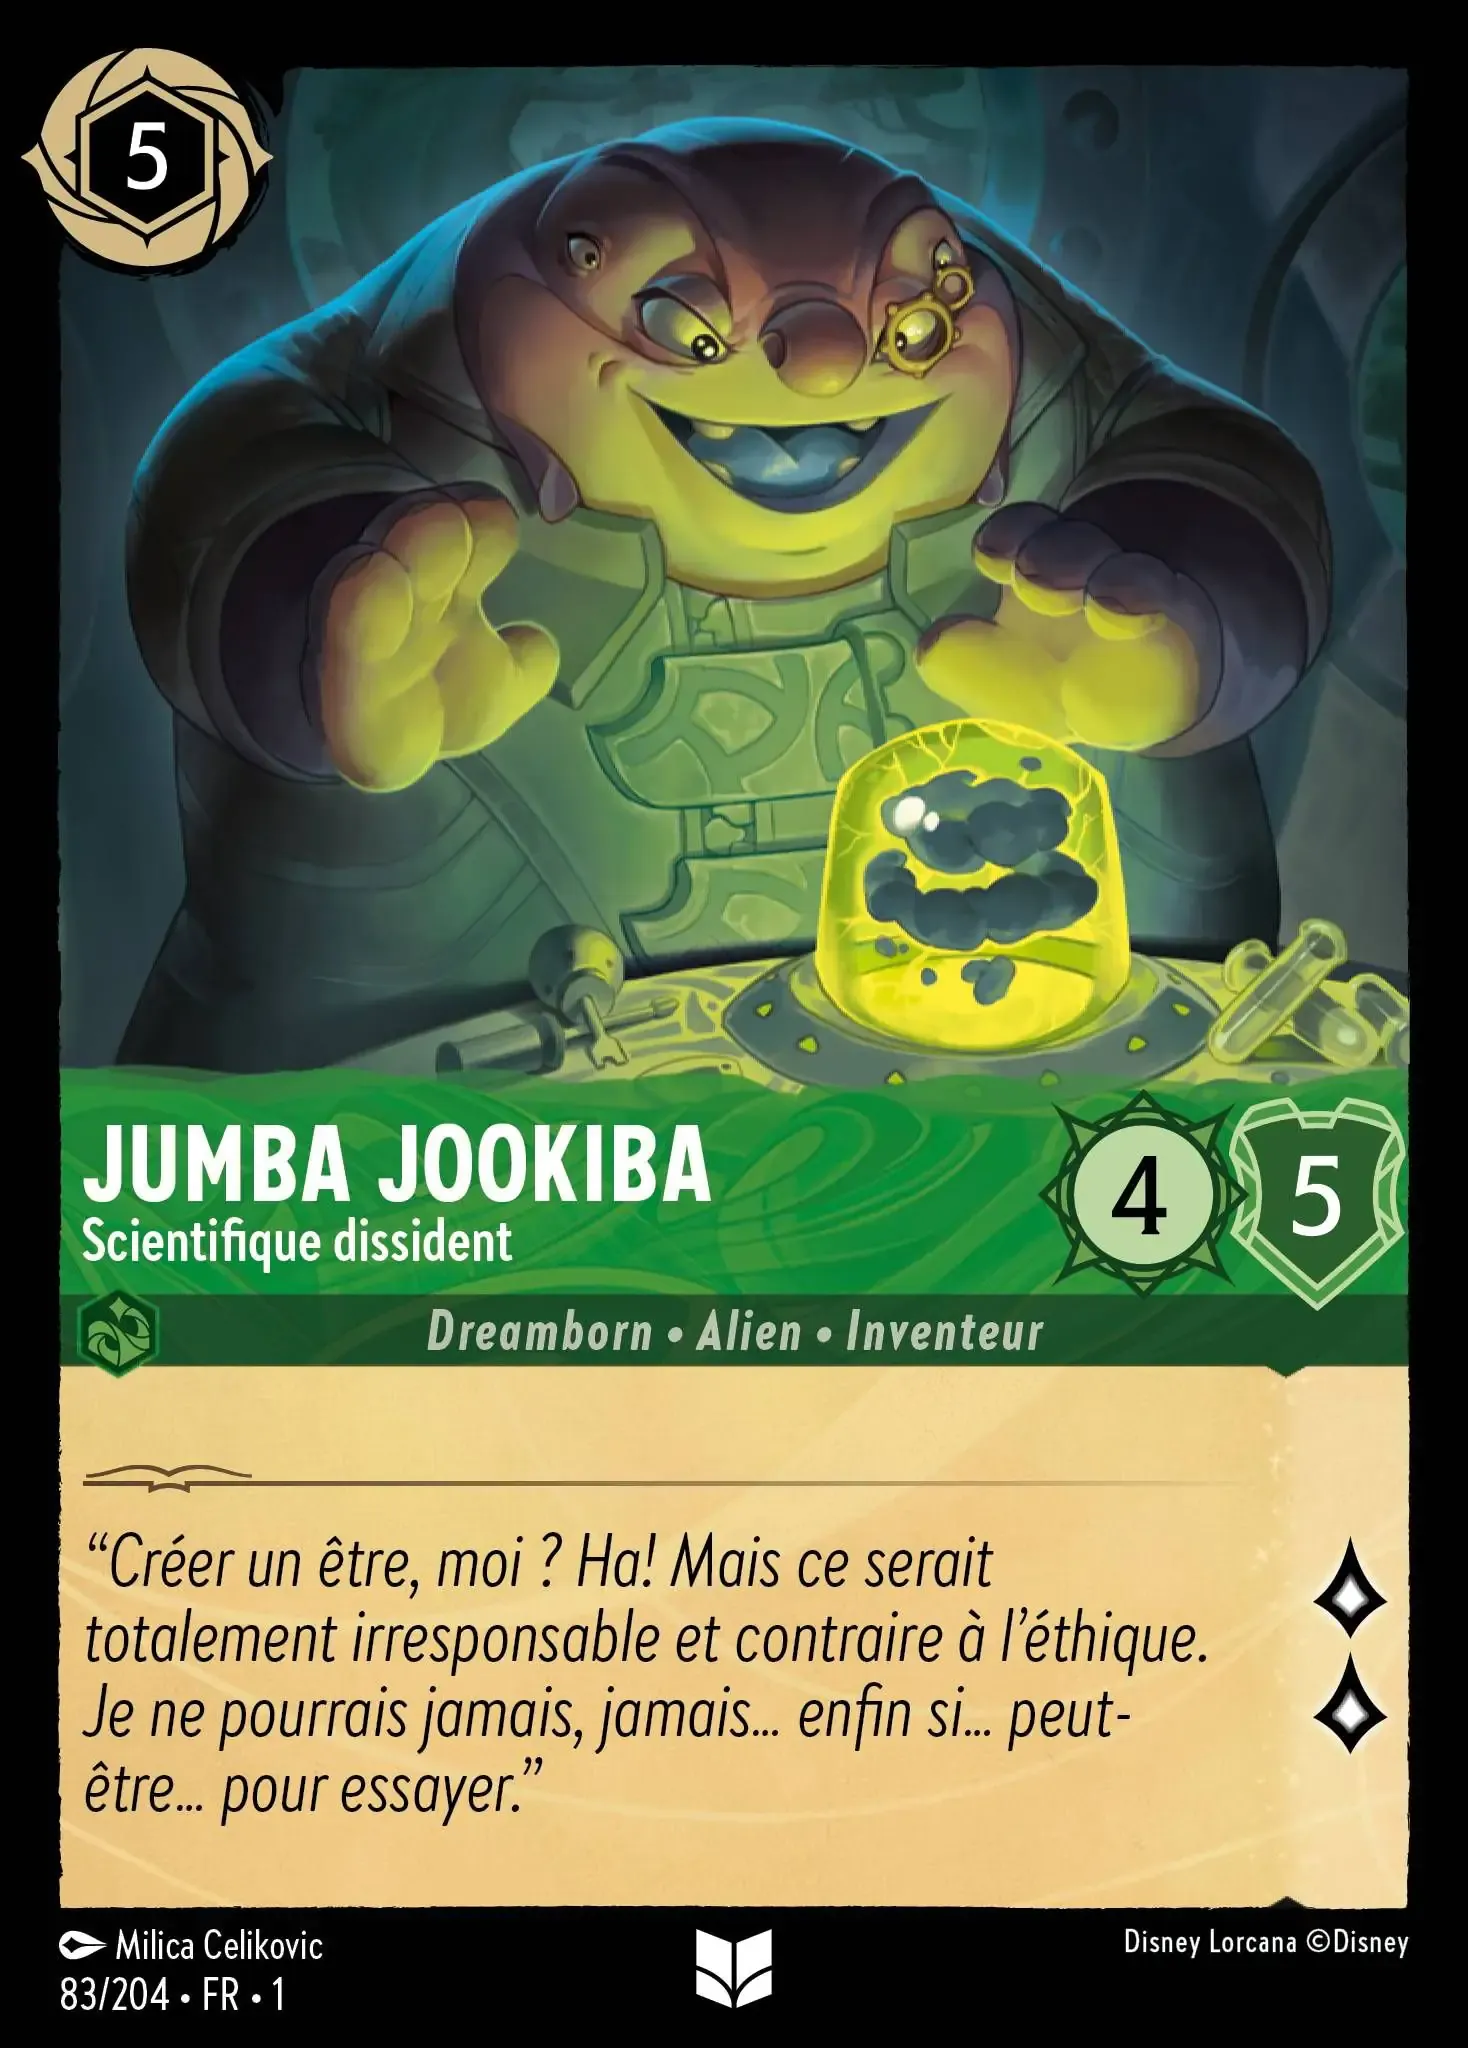 Jumba Jookiba - Renegade Scientist, Disney Lorcana